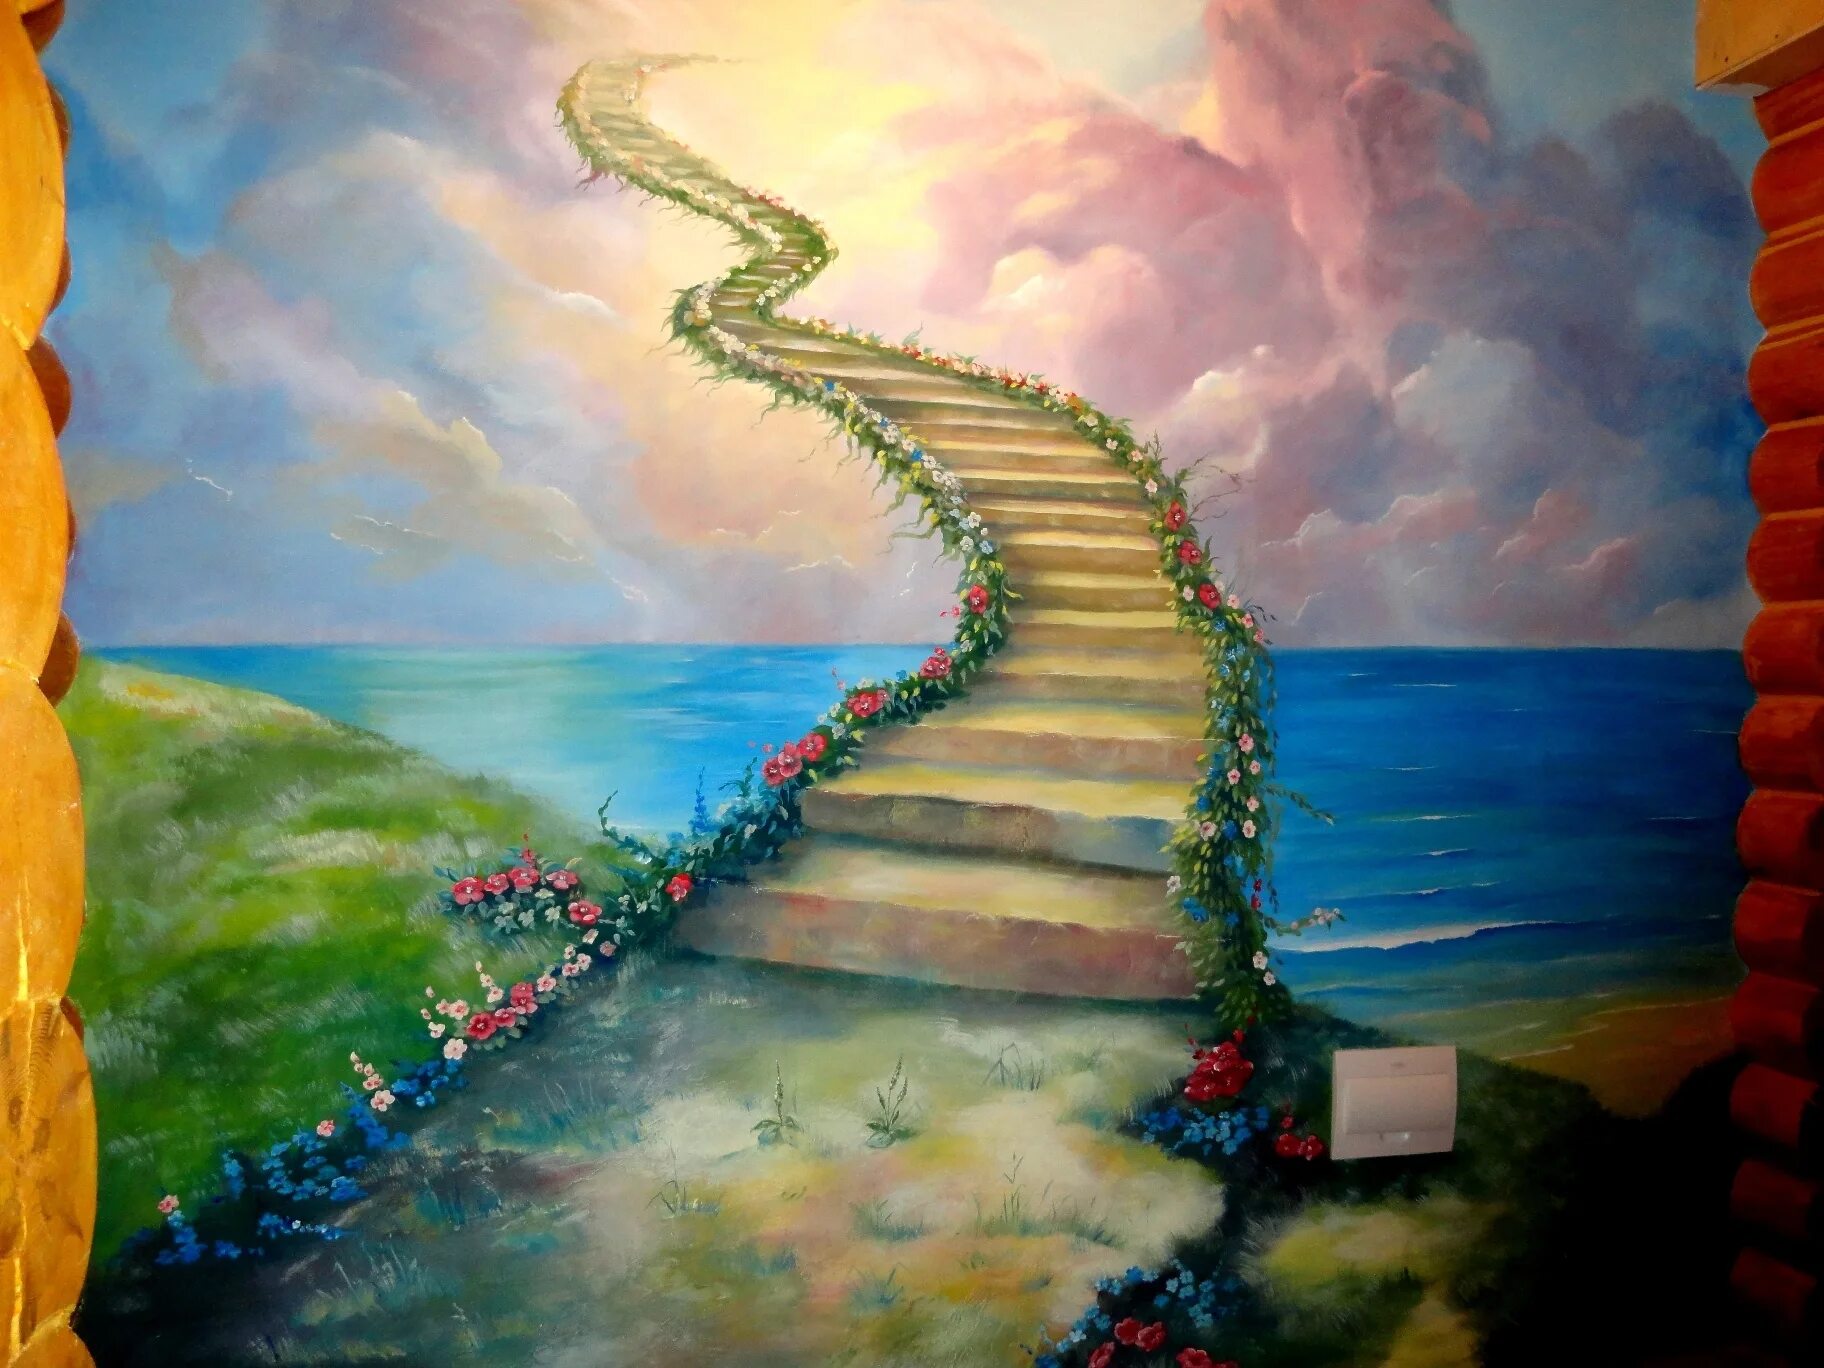 Картина лестница в небеса Джим Уоррен. Лестница в небо картина Джима Уоррена. Дорога к небу. Сказочная лестница в небо.